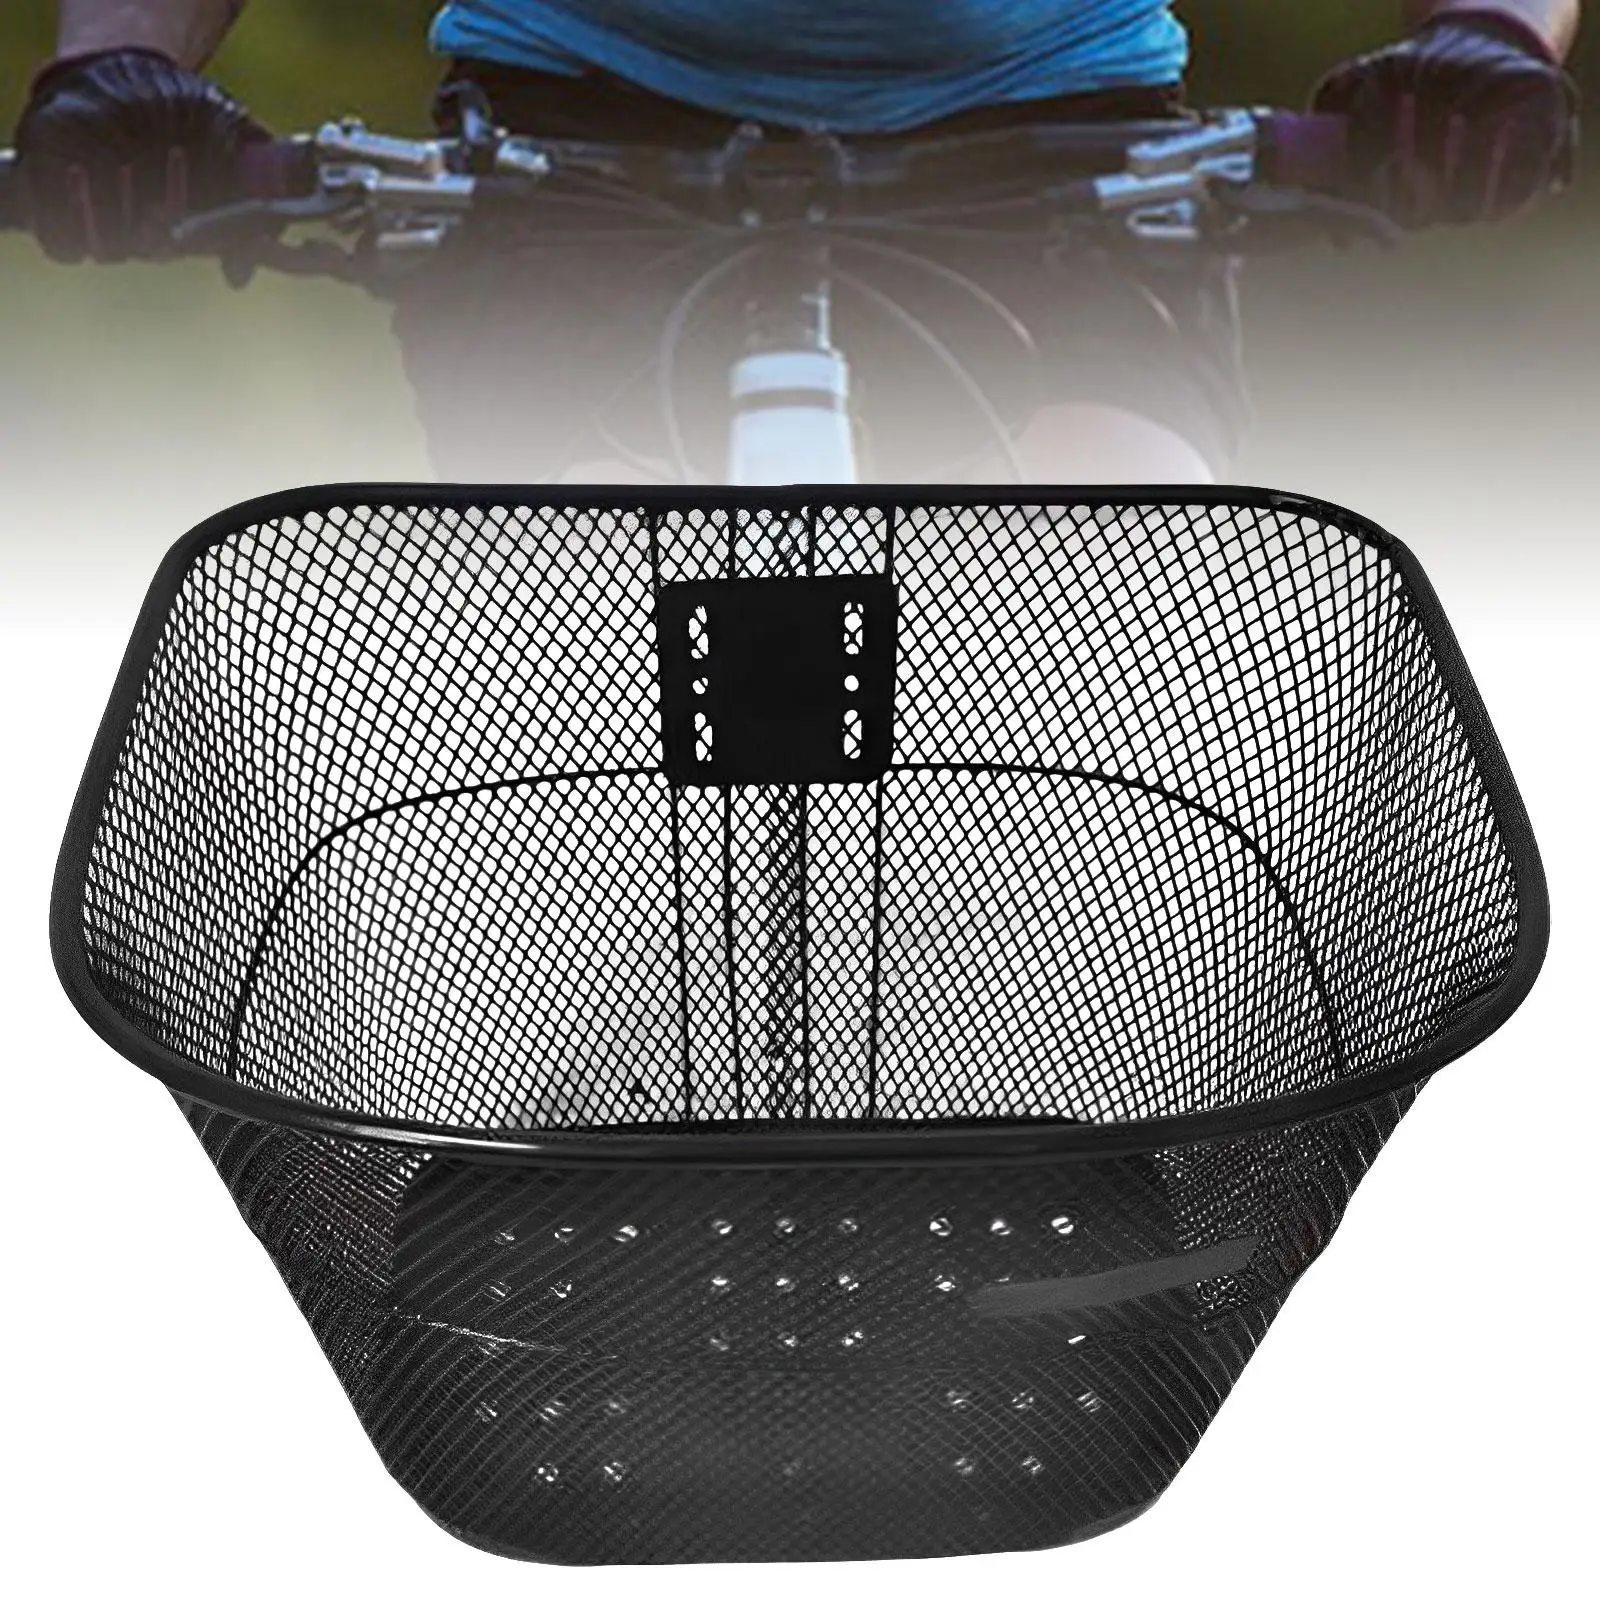 Bicycle Basket Metal Front Handlebar Basket for Bicycling Commuting Shopping